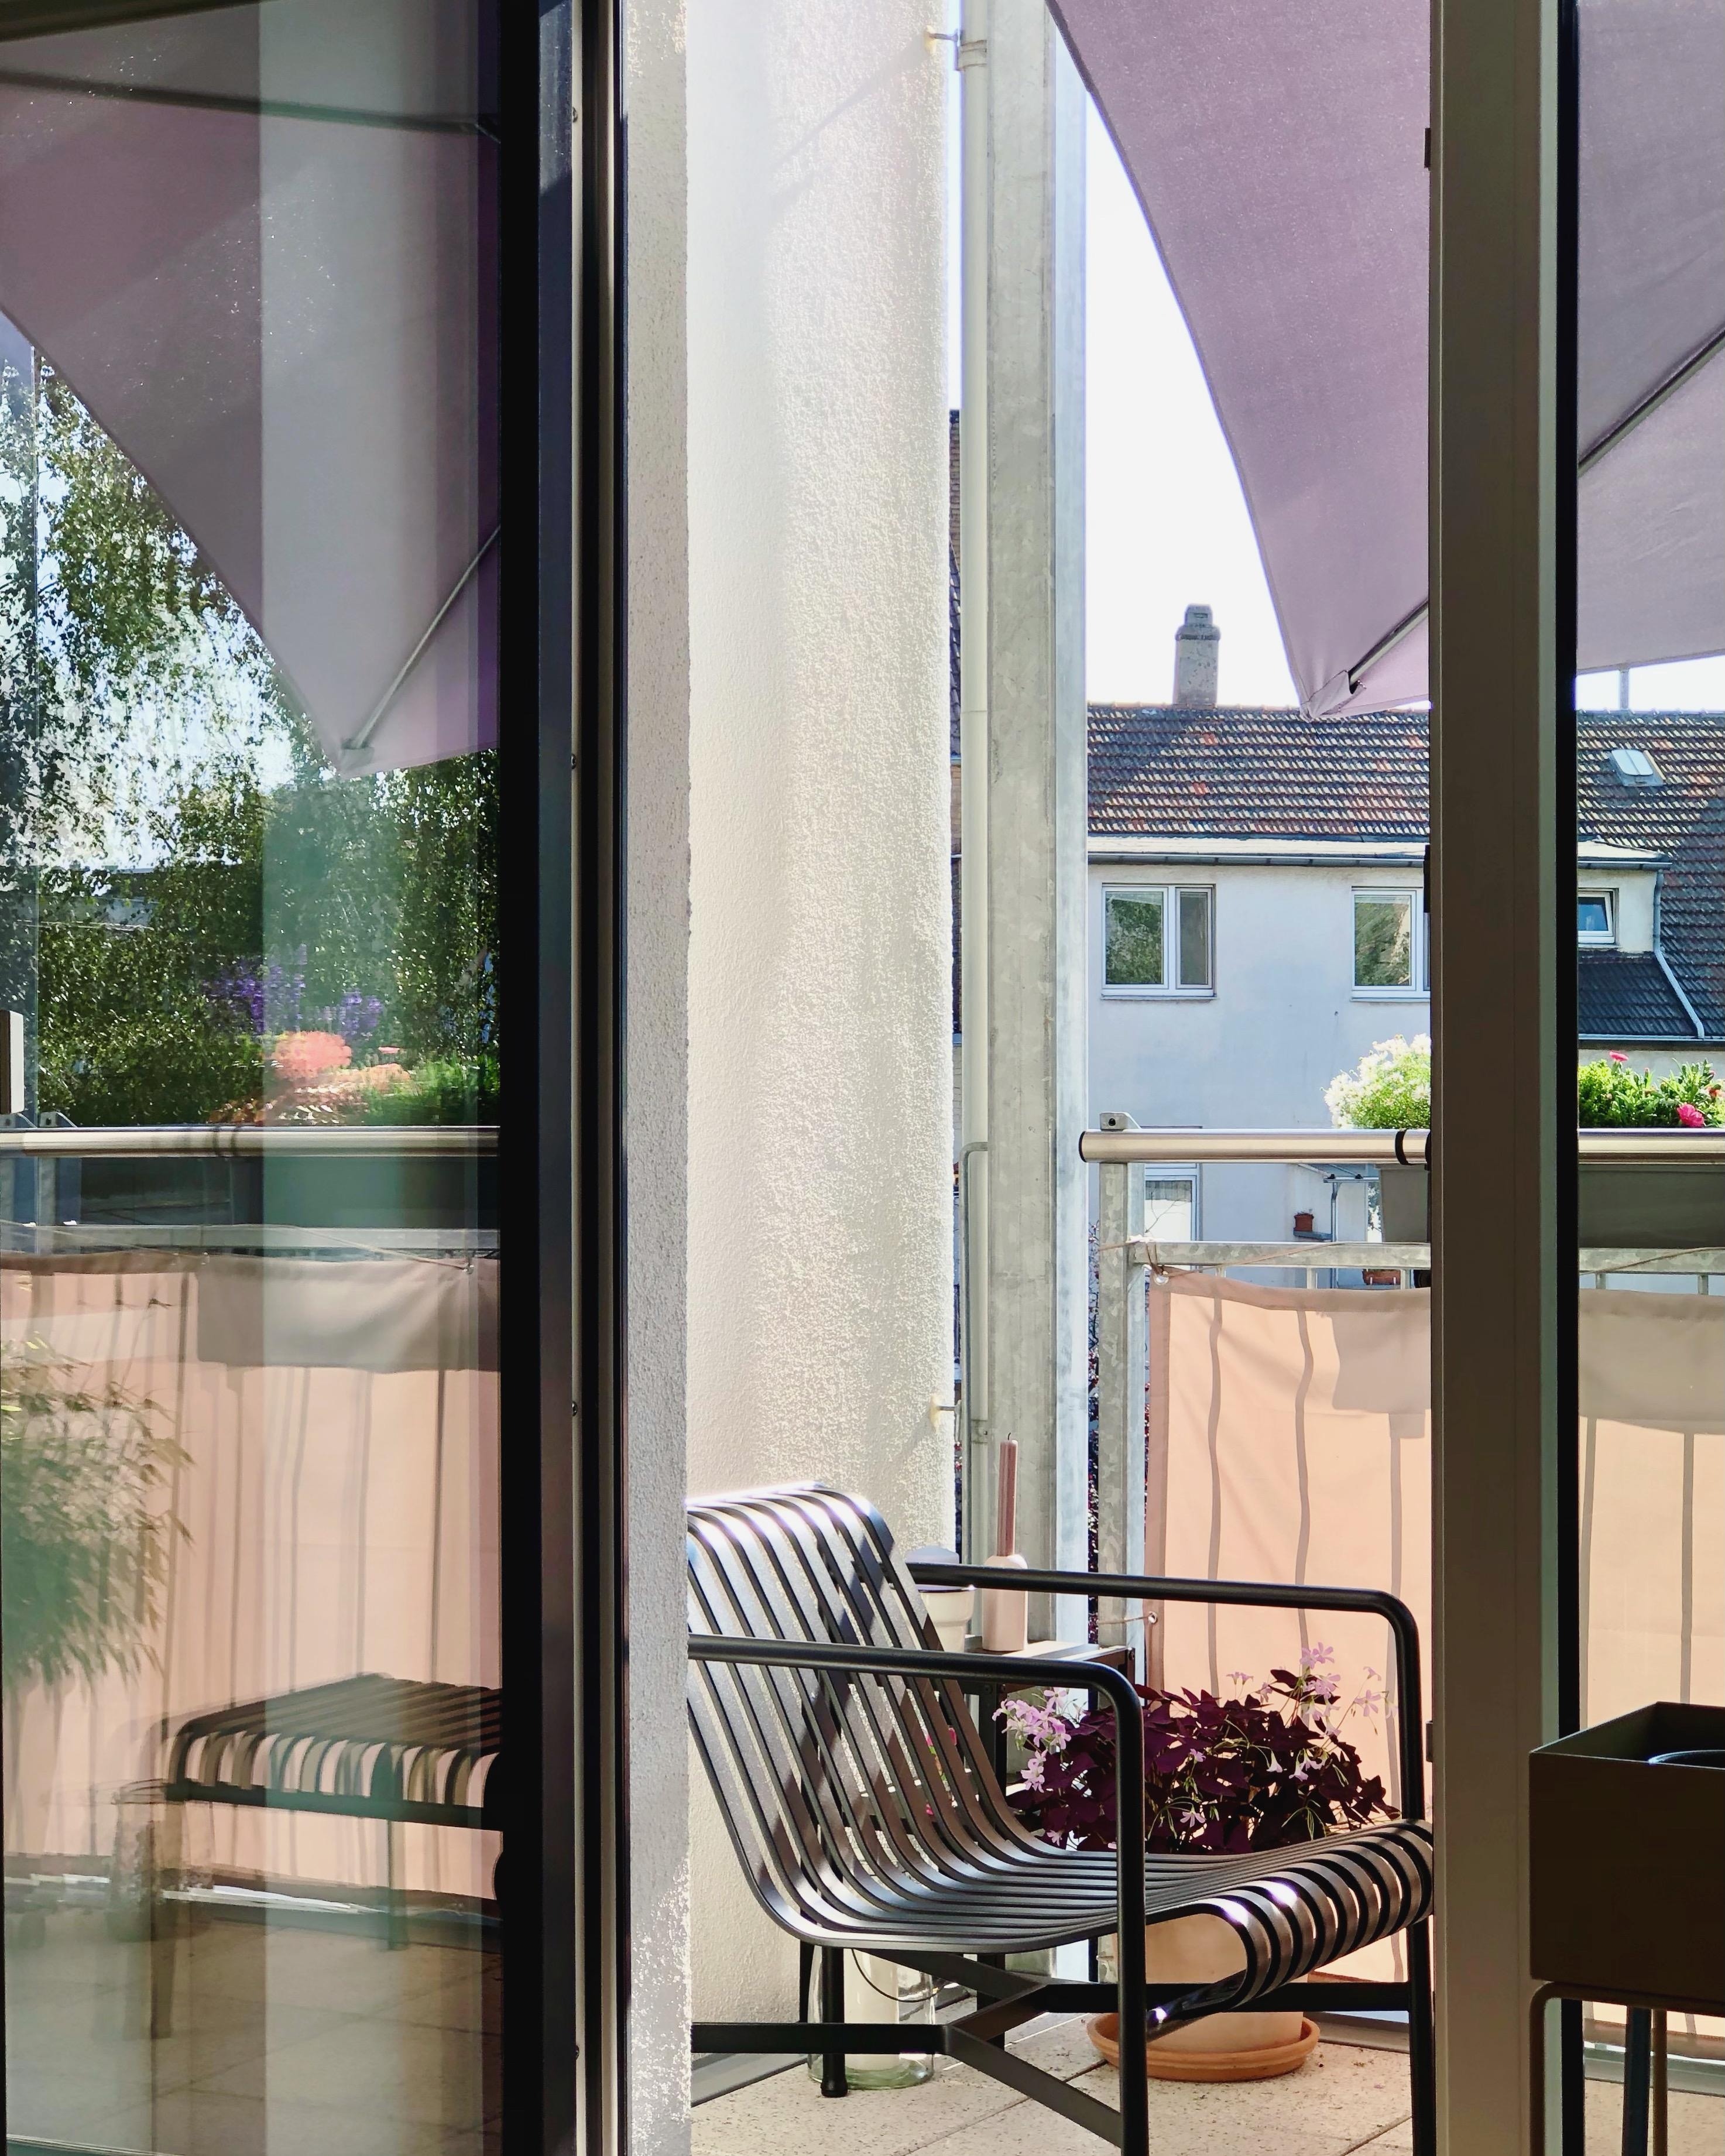 #mondayvibes #balkony #balkon #balkondeko #balkoninspo #balkonliebe #outdoor #summer #terrasse #plants #couchstyle